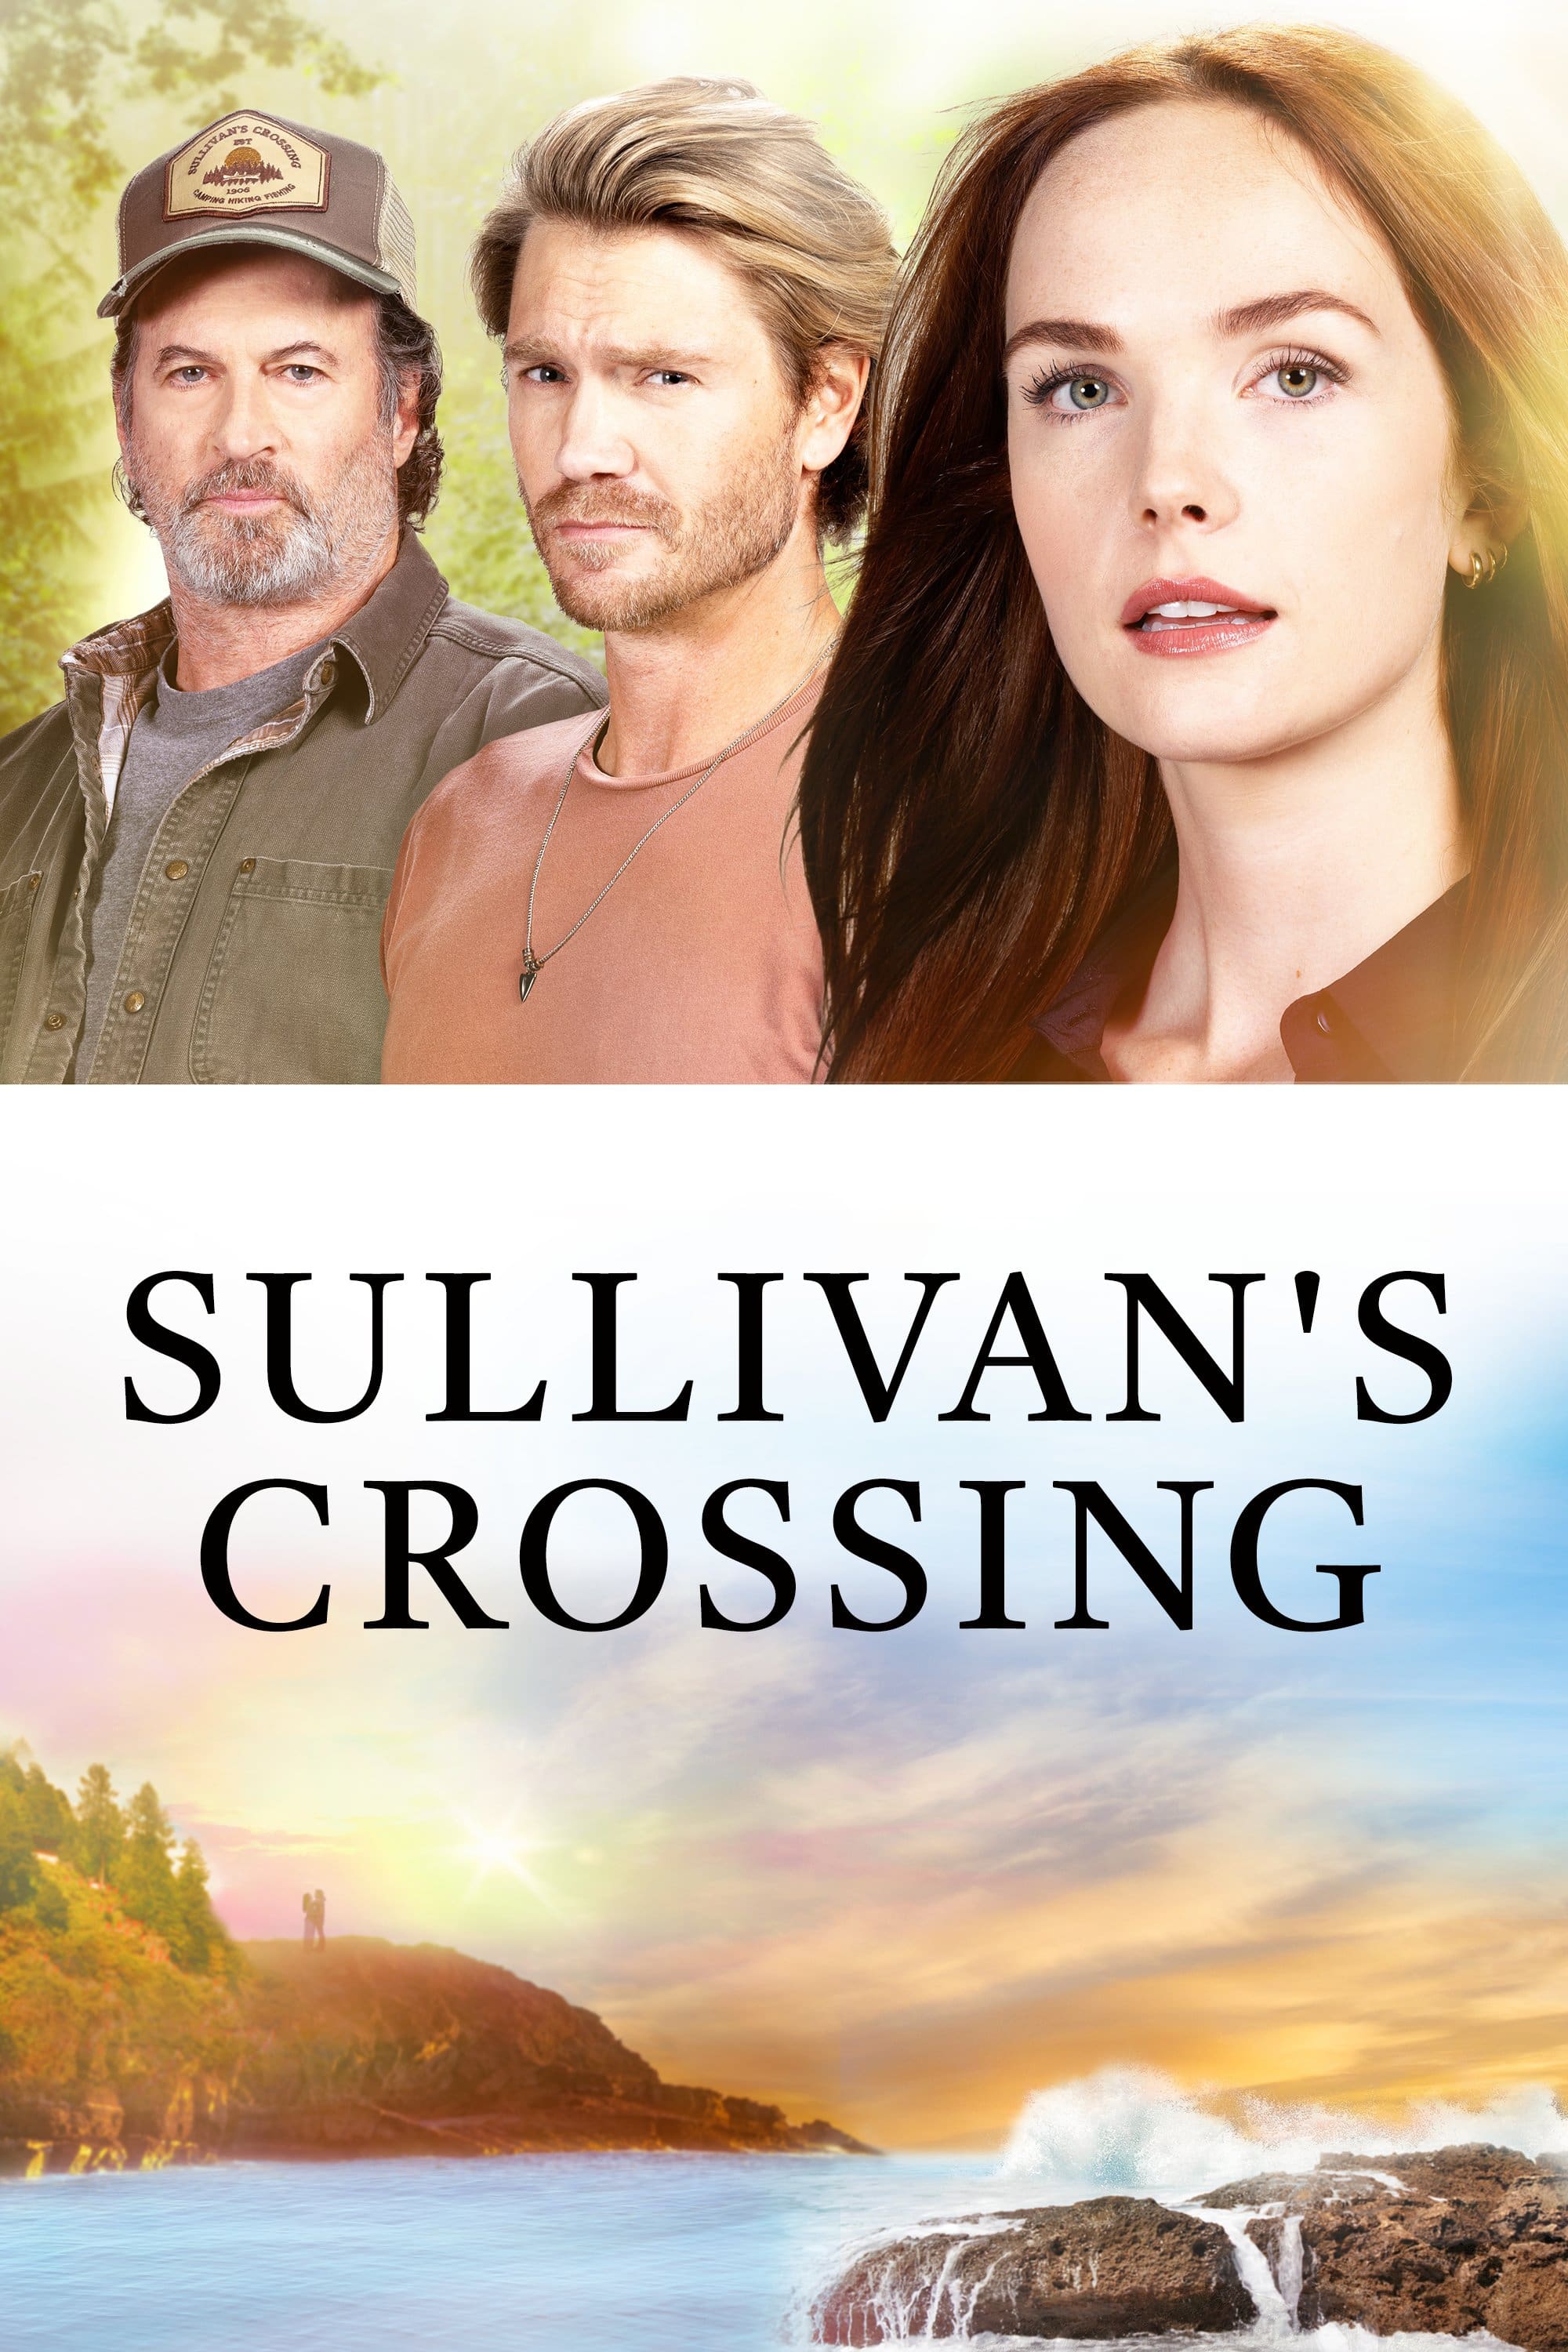 Voir Film Sullivan's Crossing - Série TV 2023 streaming VF gratuit complet